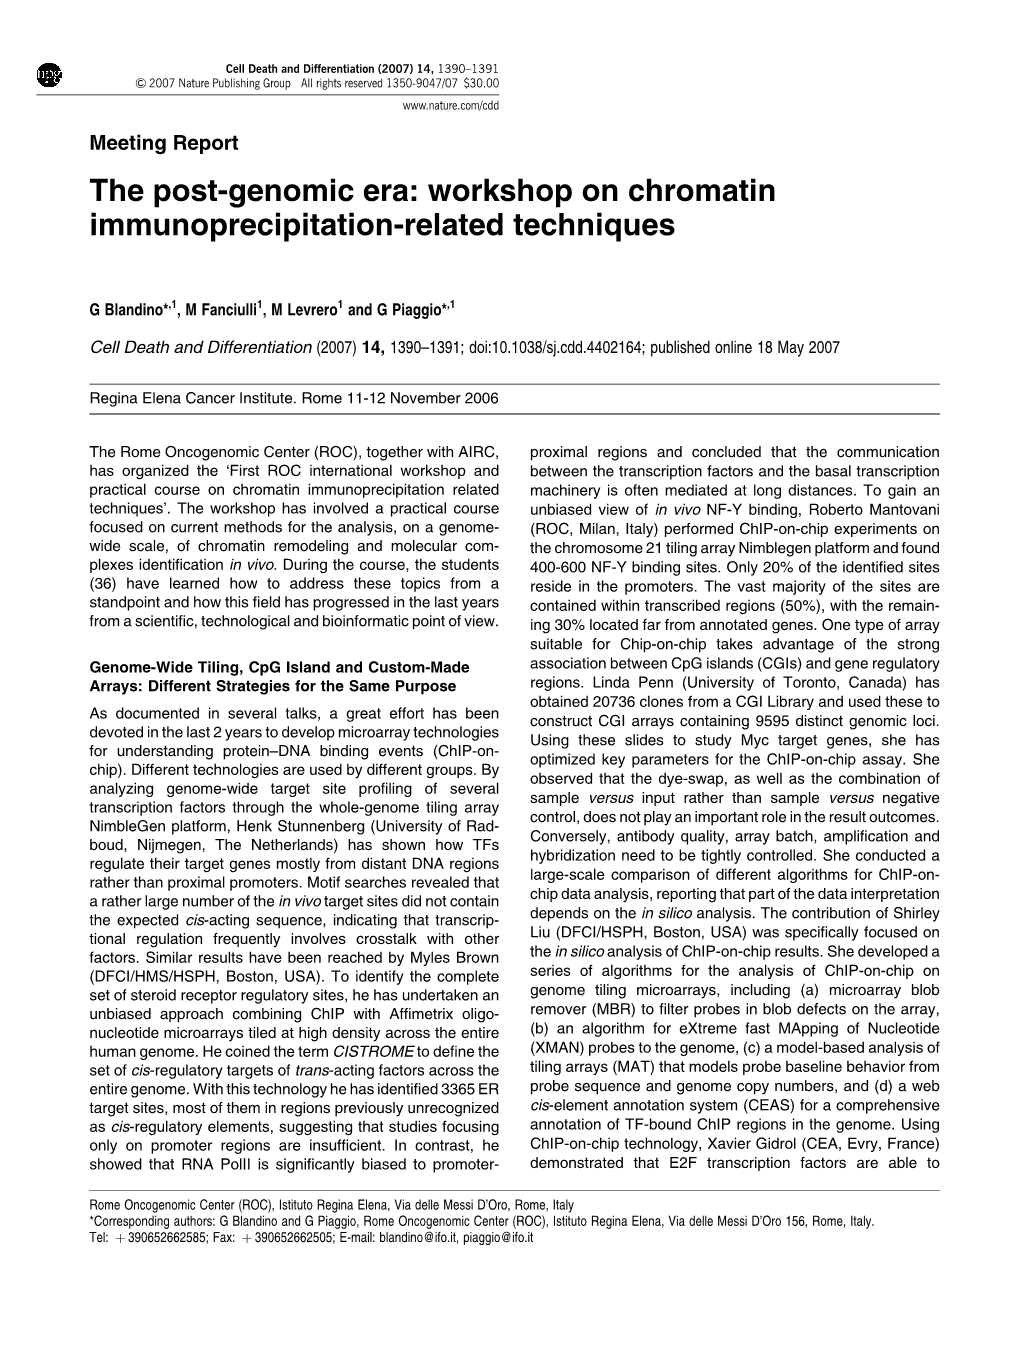 Workshop on Chromatin Immunoprecipitation-Related Techniques